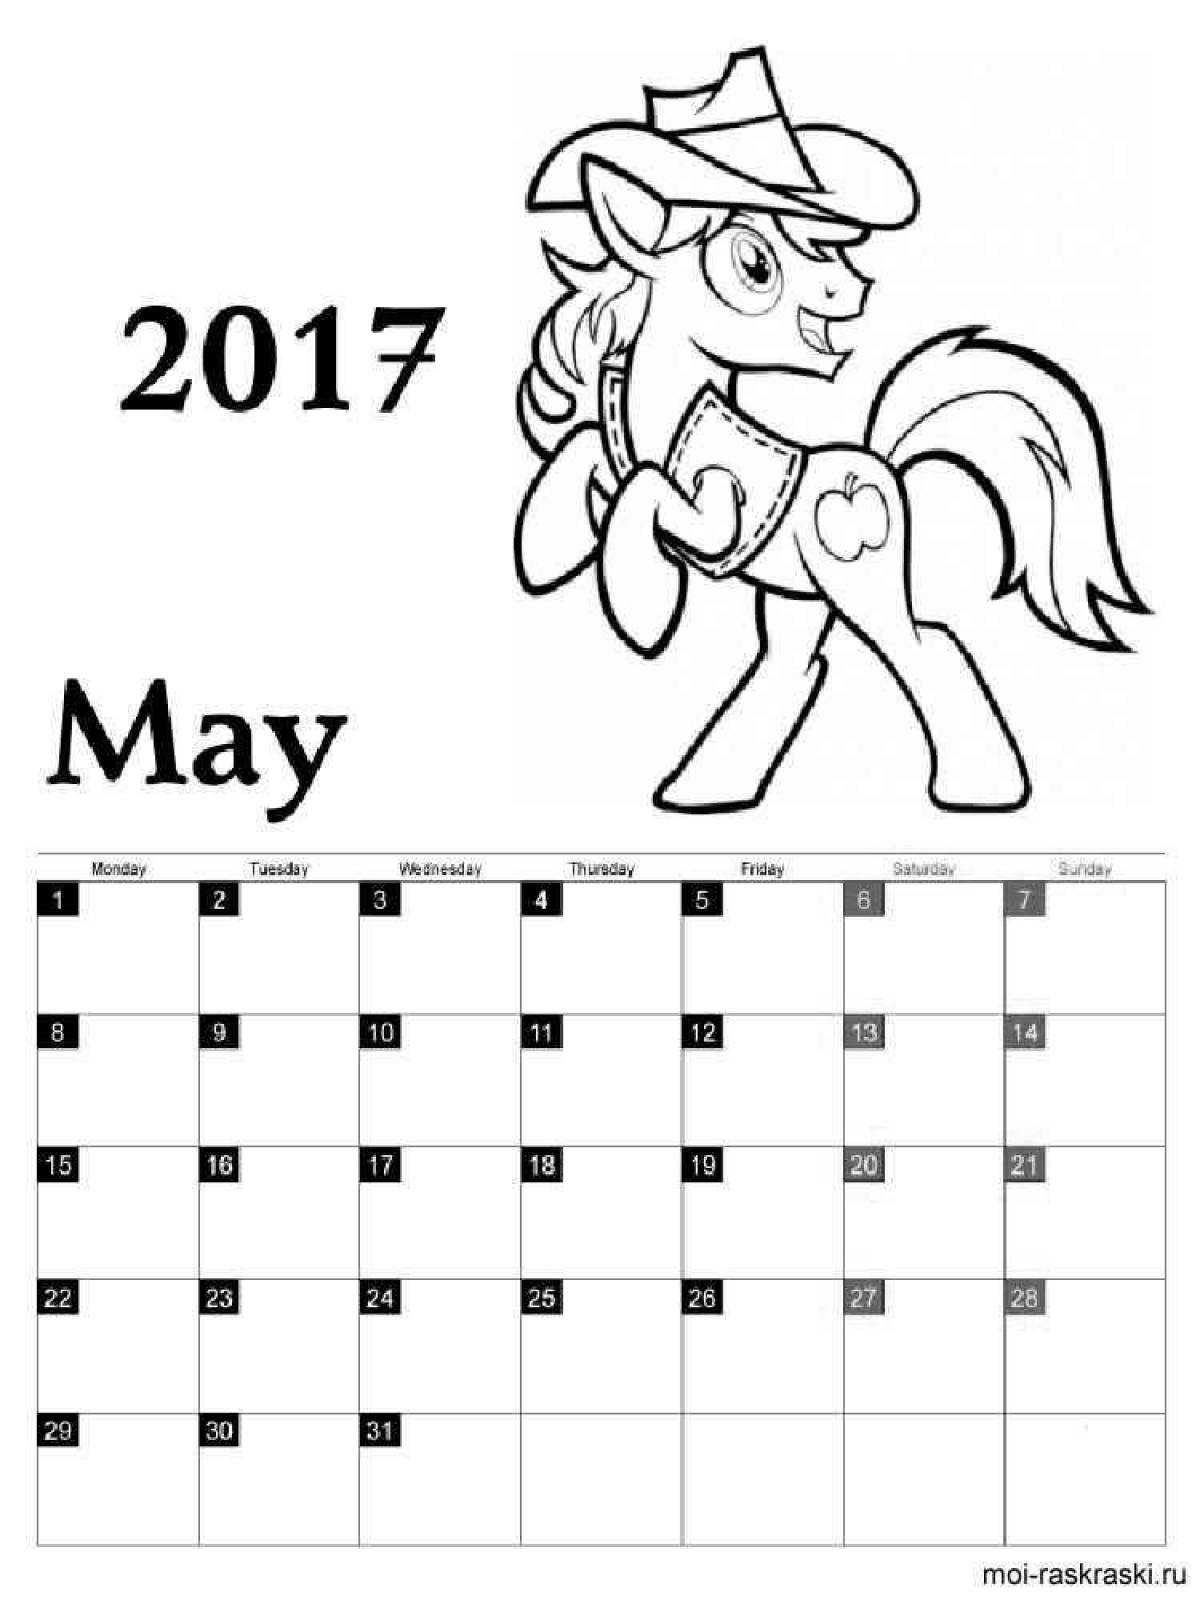 Раскраска календарь май